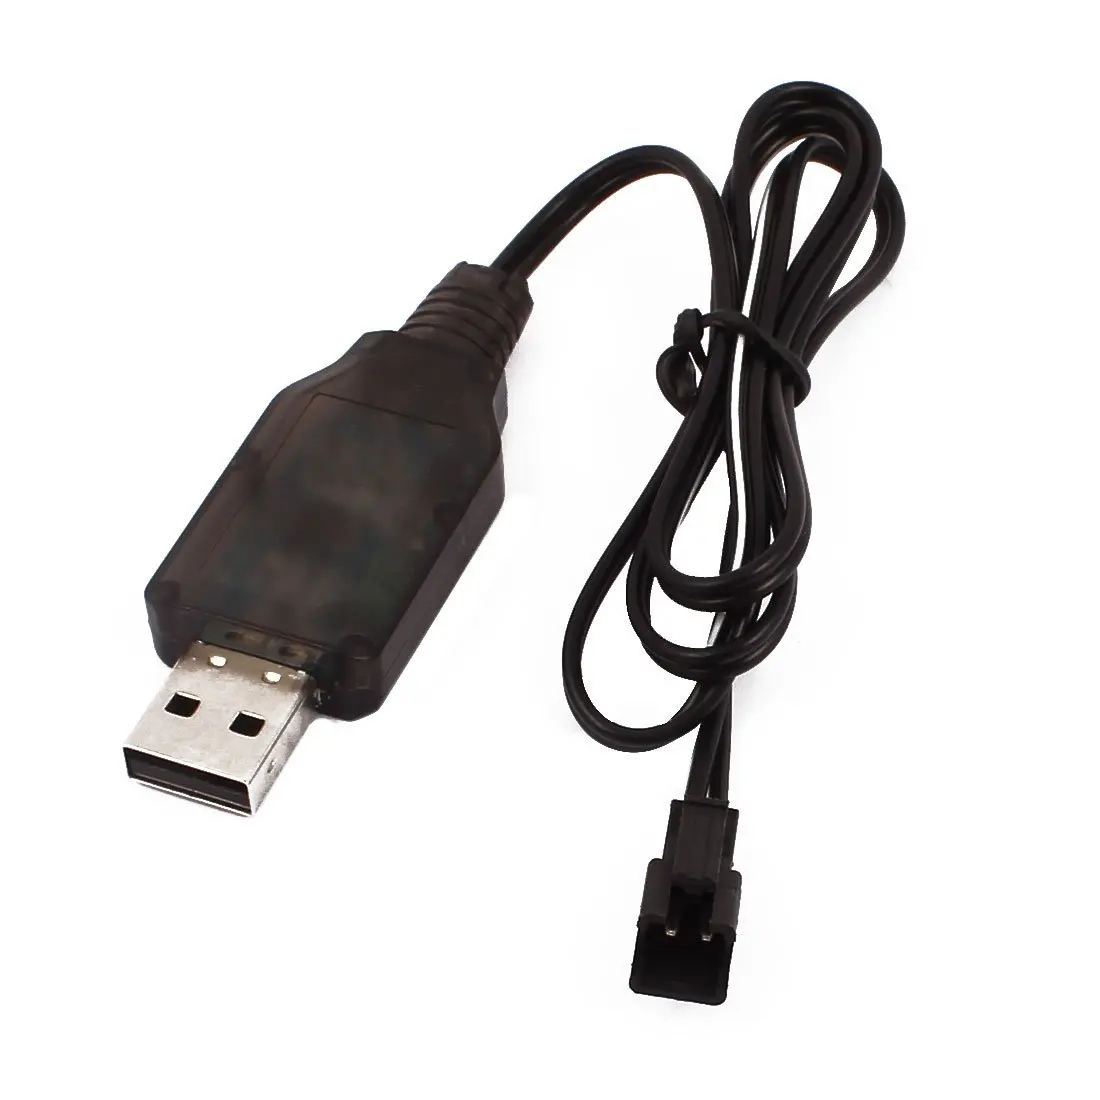 Зарядка 7.4. USB Charger 6v 250ma. Sm2p зарядка. USB зарядка 4.8v 250ma. USB зарядка YP 4 P.